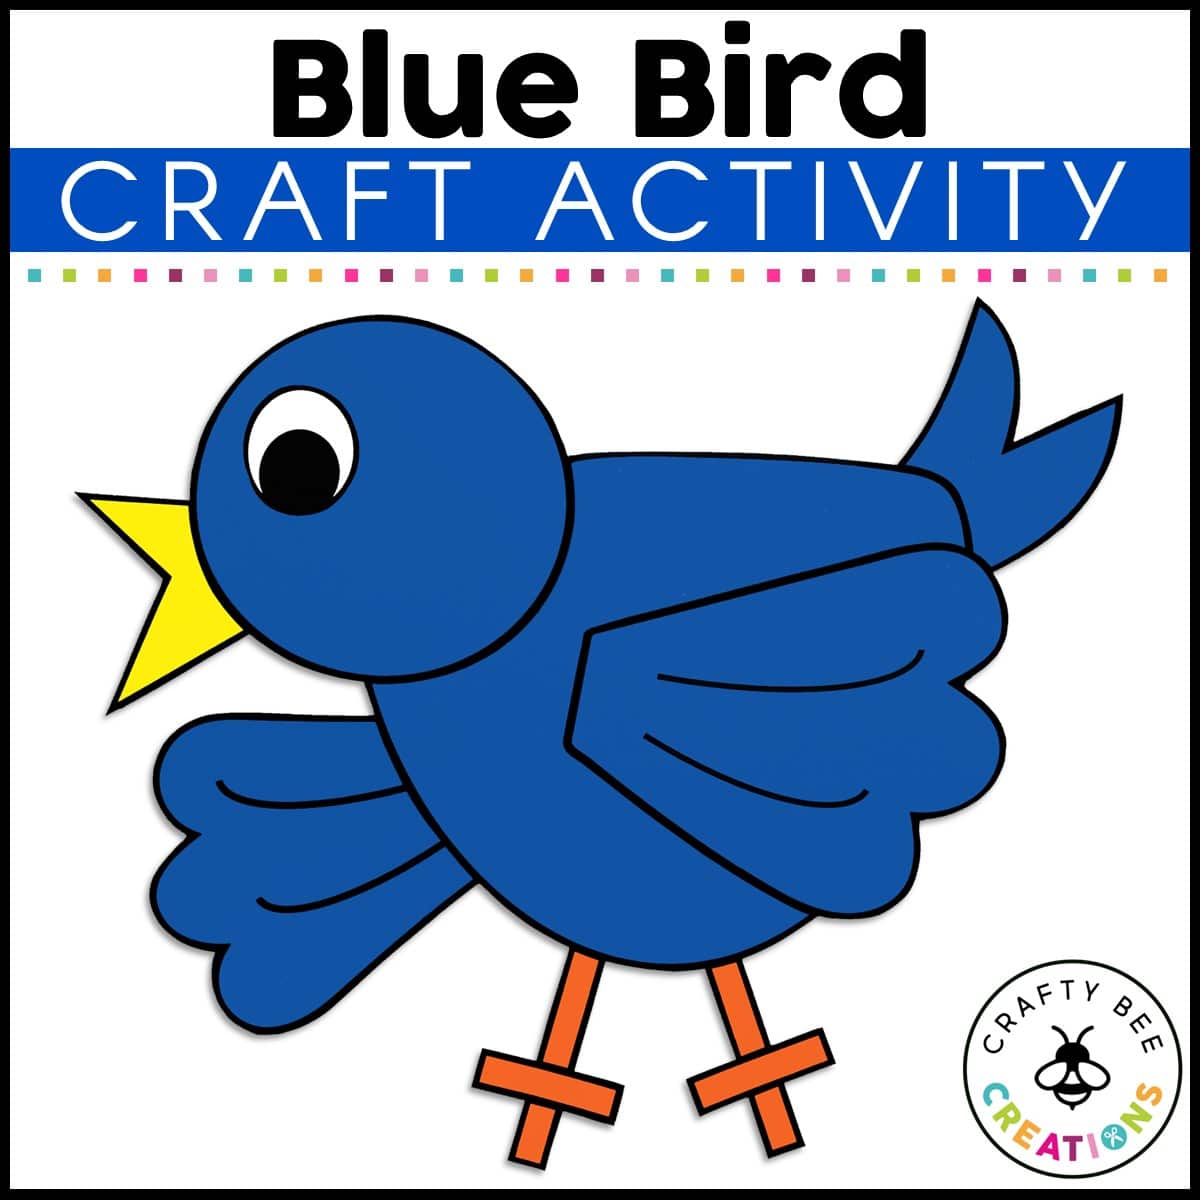 Blue Bird Craft Activity Crafty Bee Creations